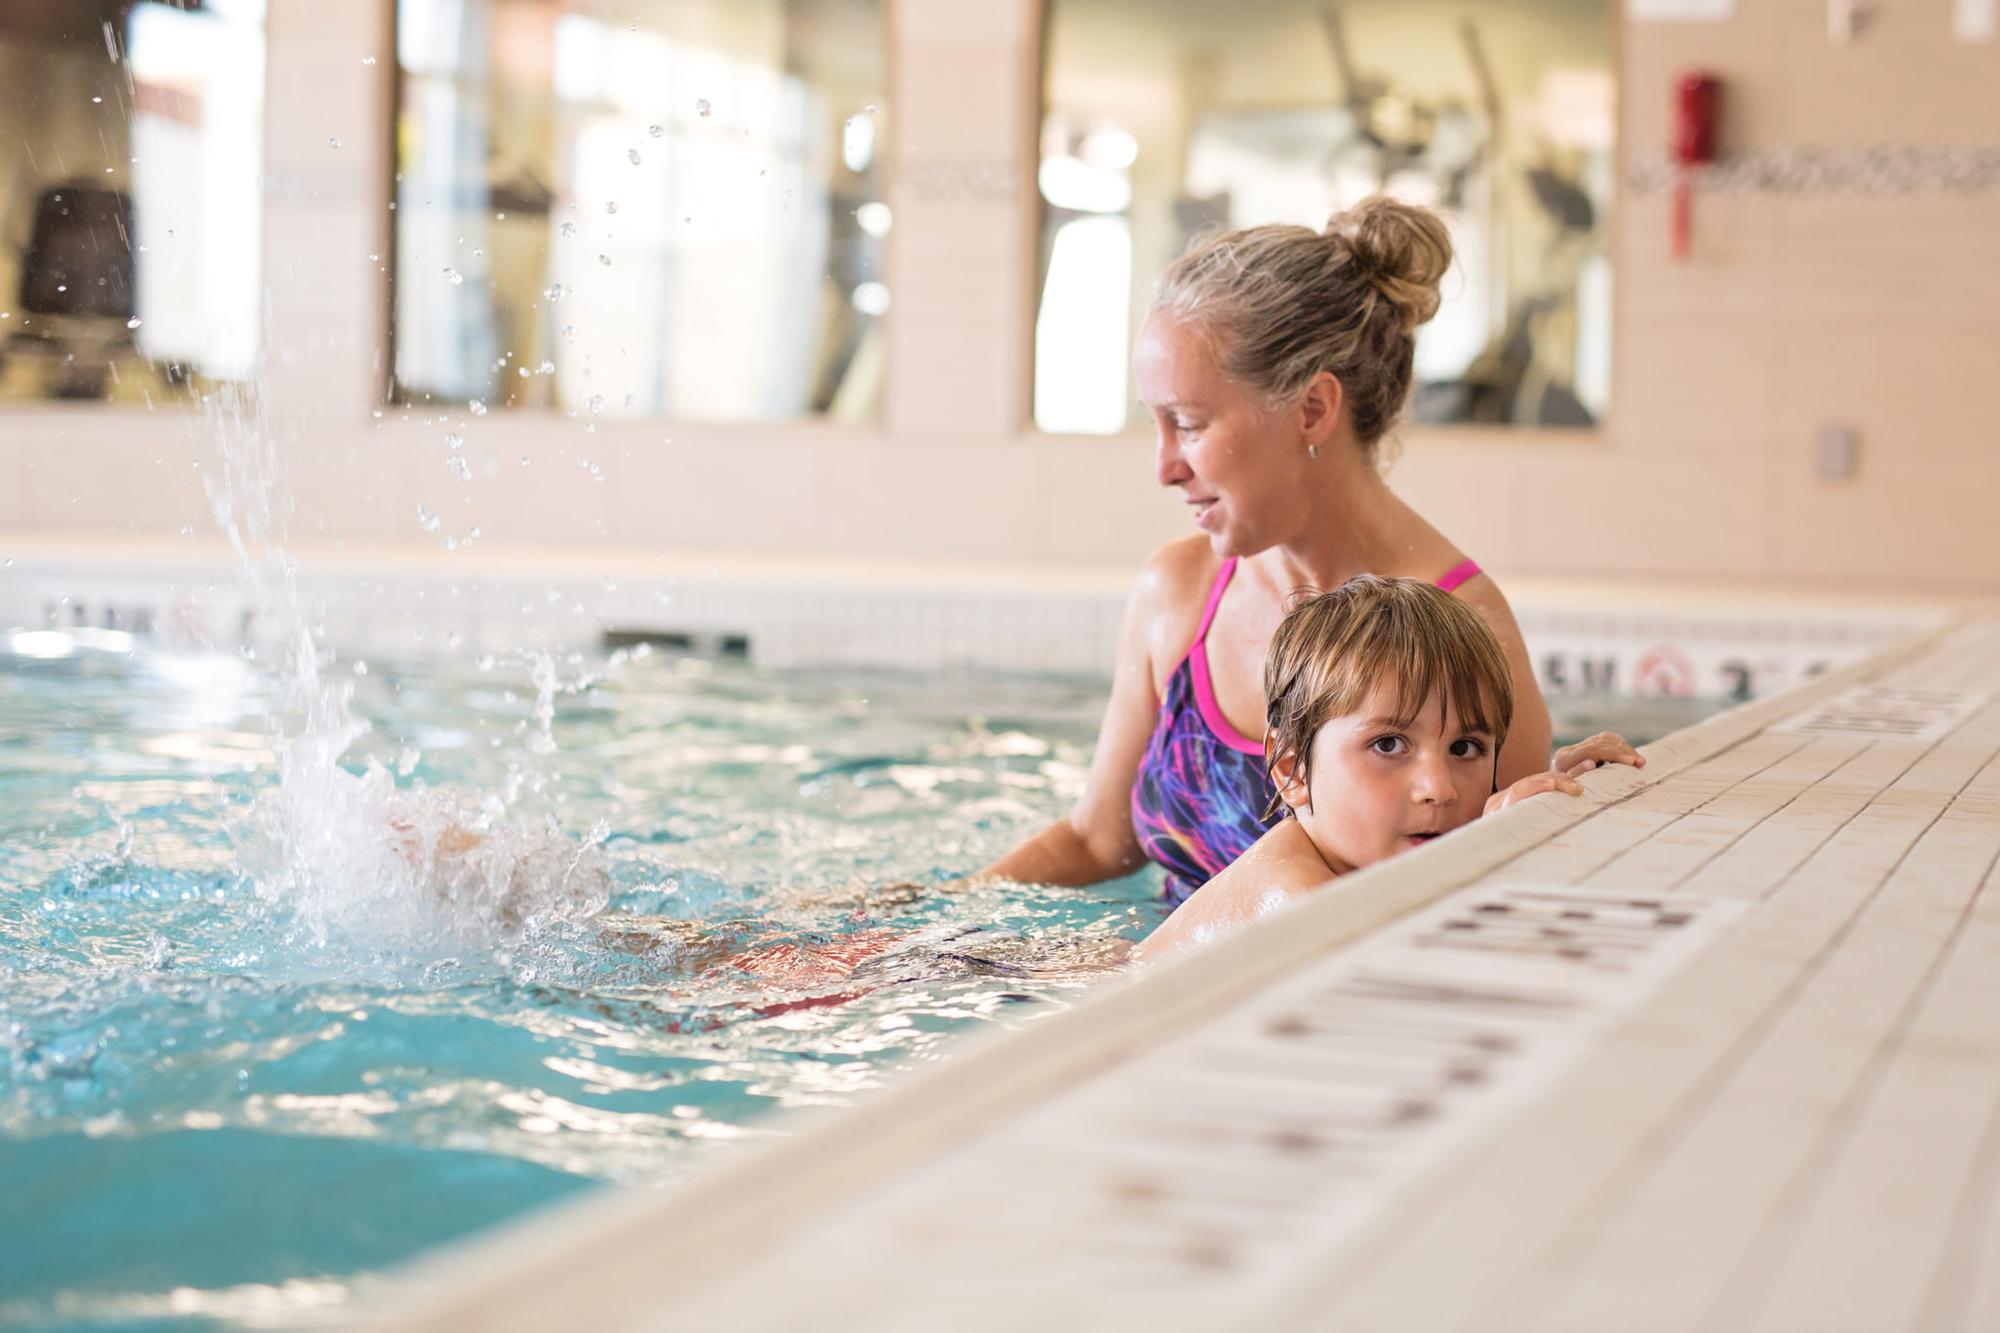 Local entrepreneur makes a splash with private swim school